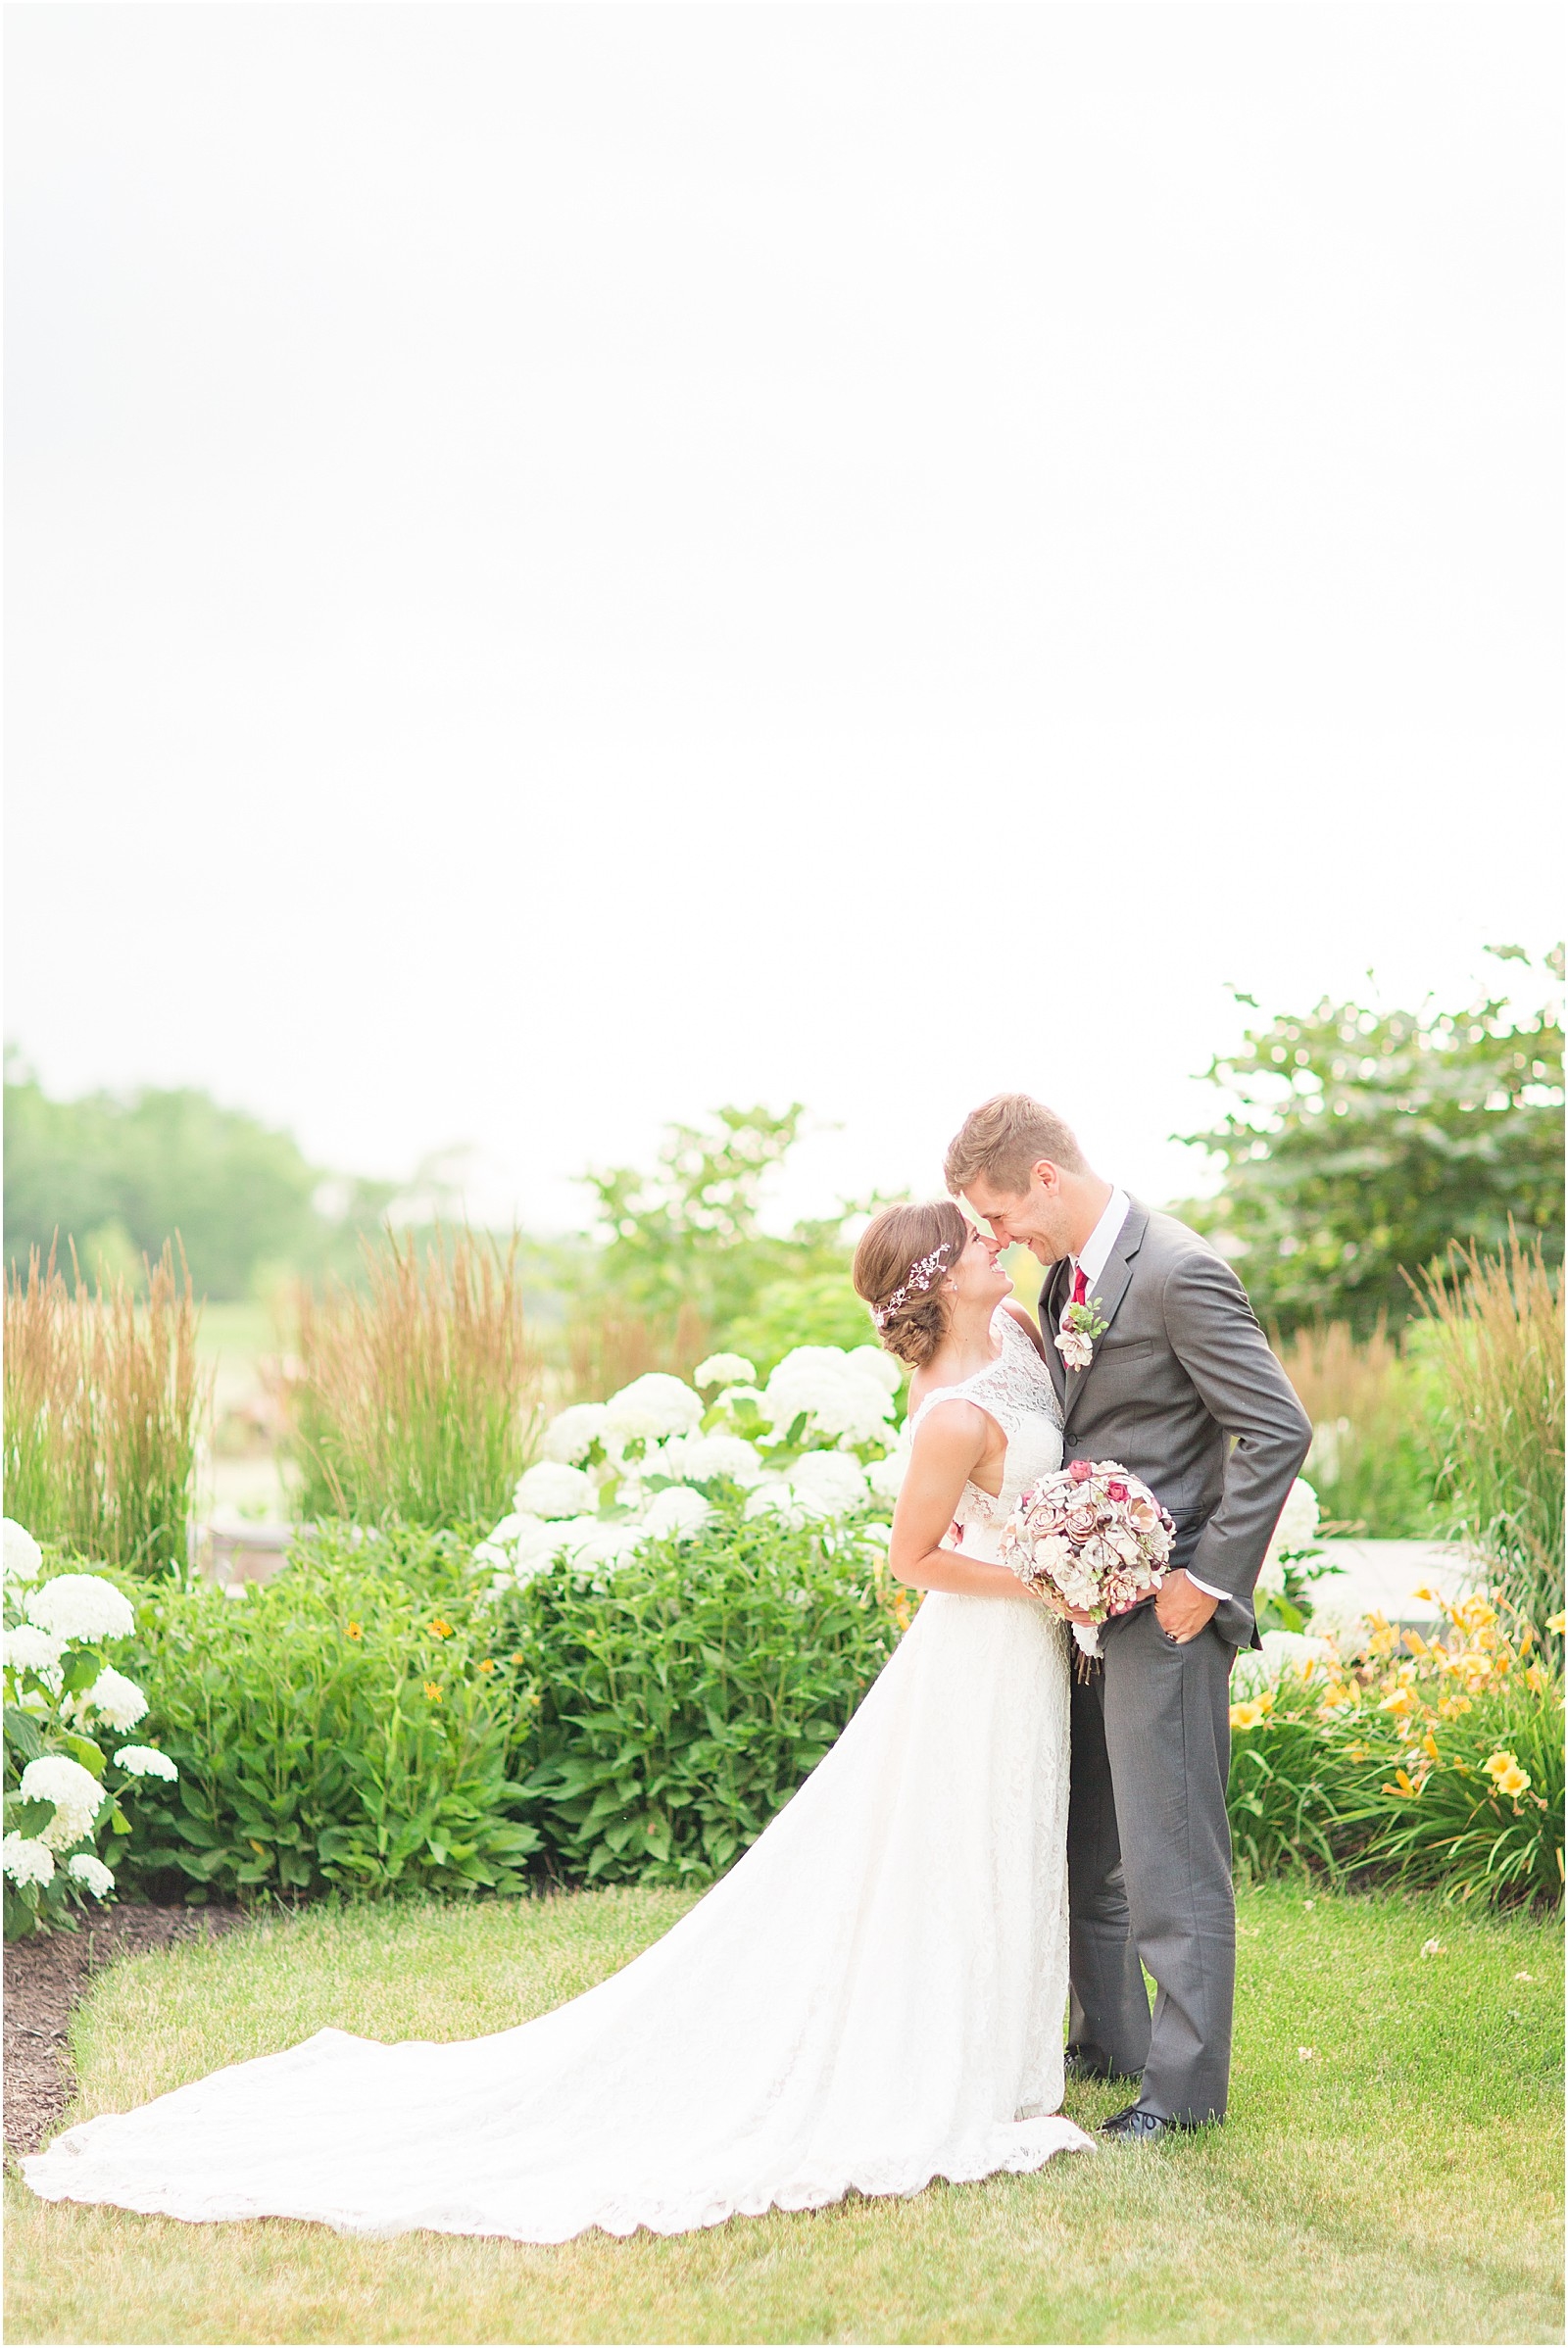 A Beautiful Lindley Farmstead at Chatham Hills Wedding | Jaclyn and Zach104.jpg